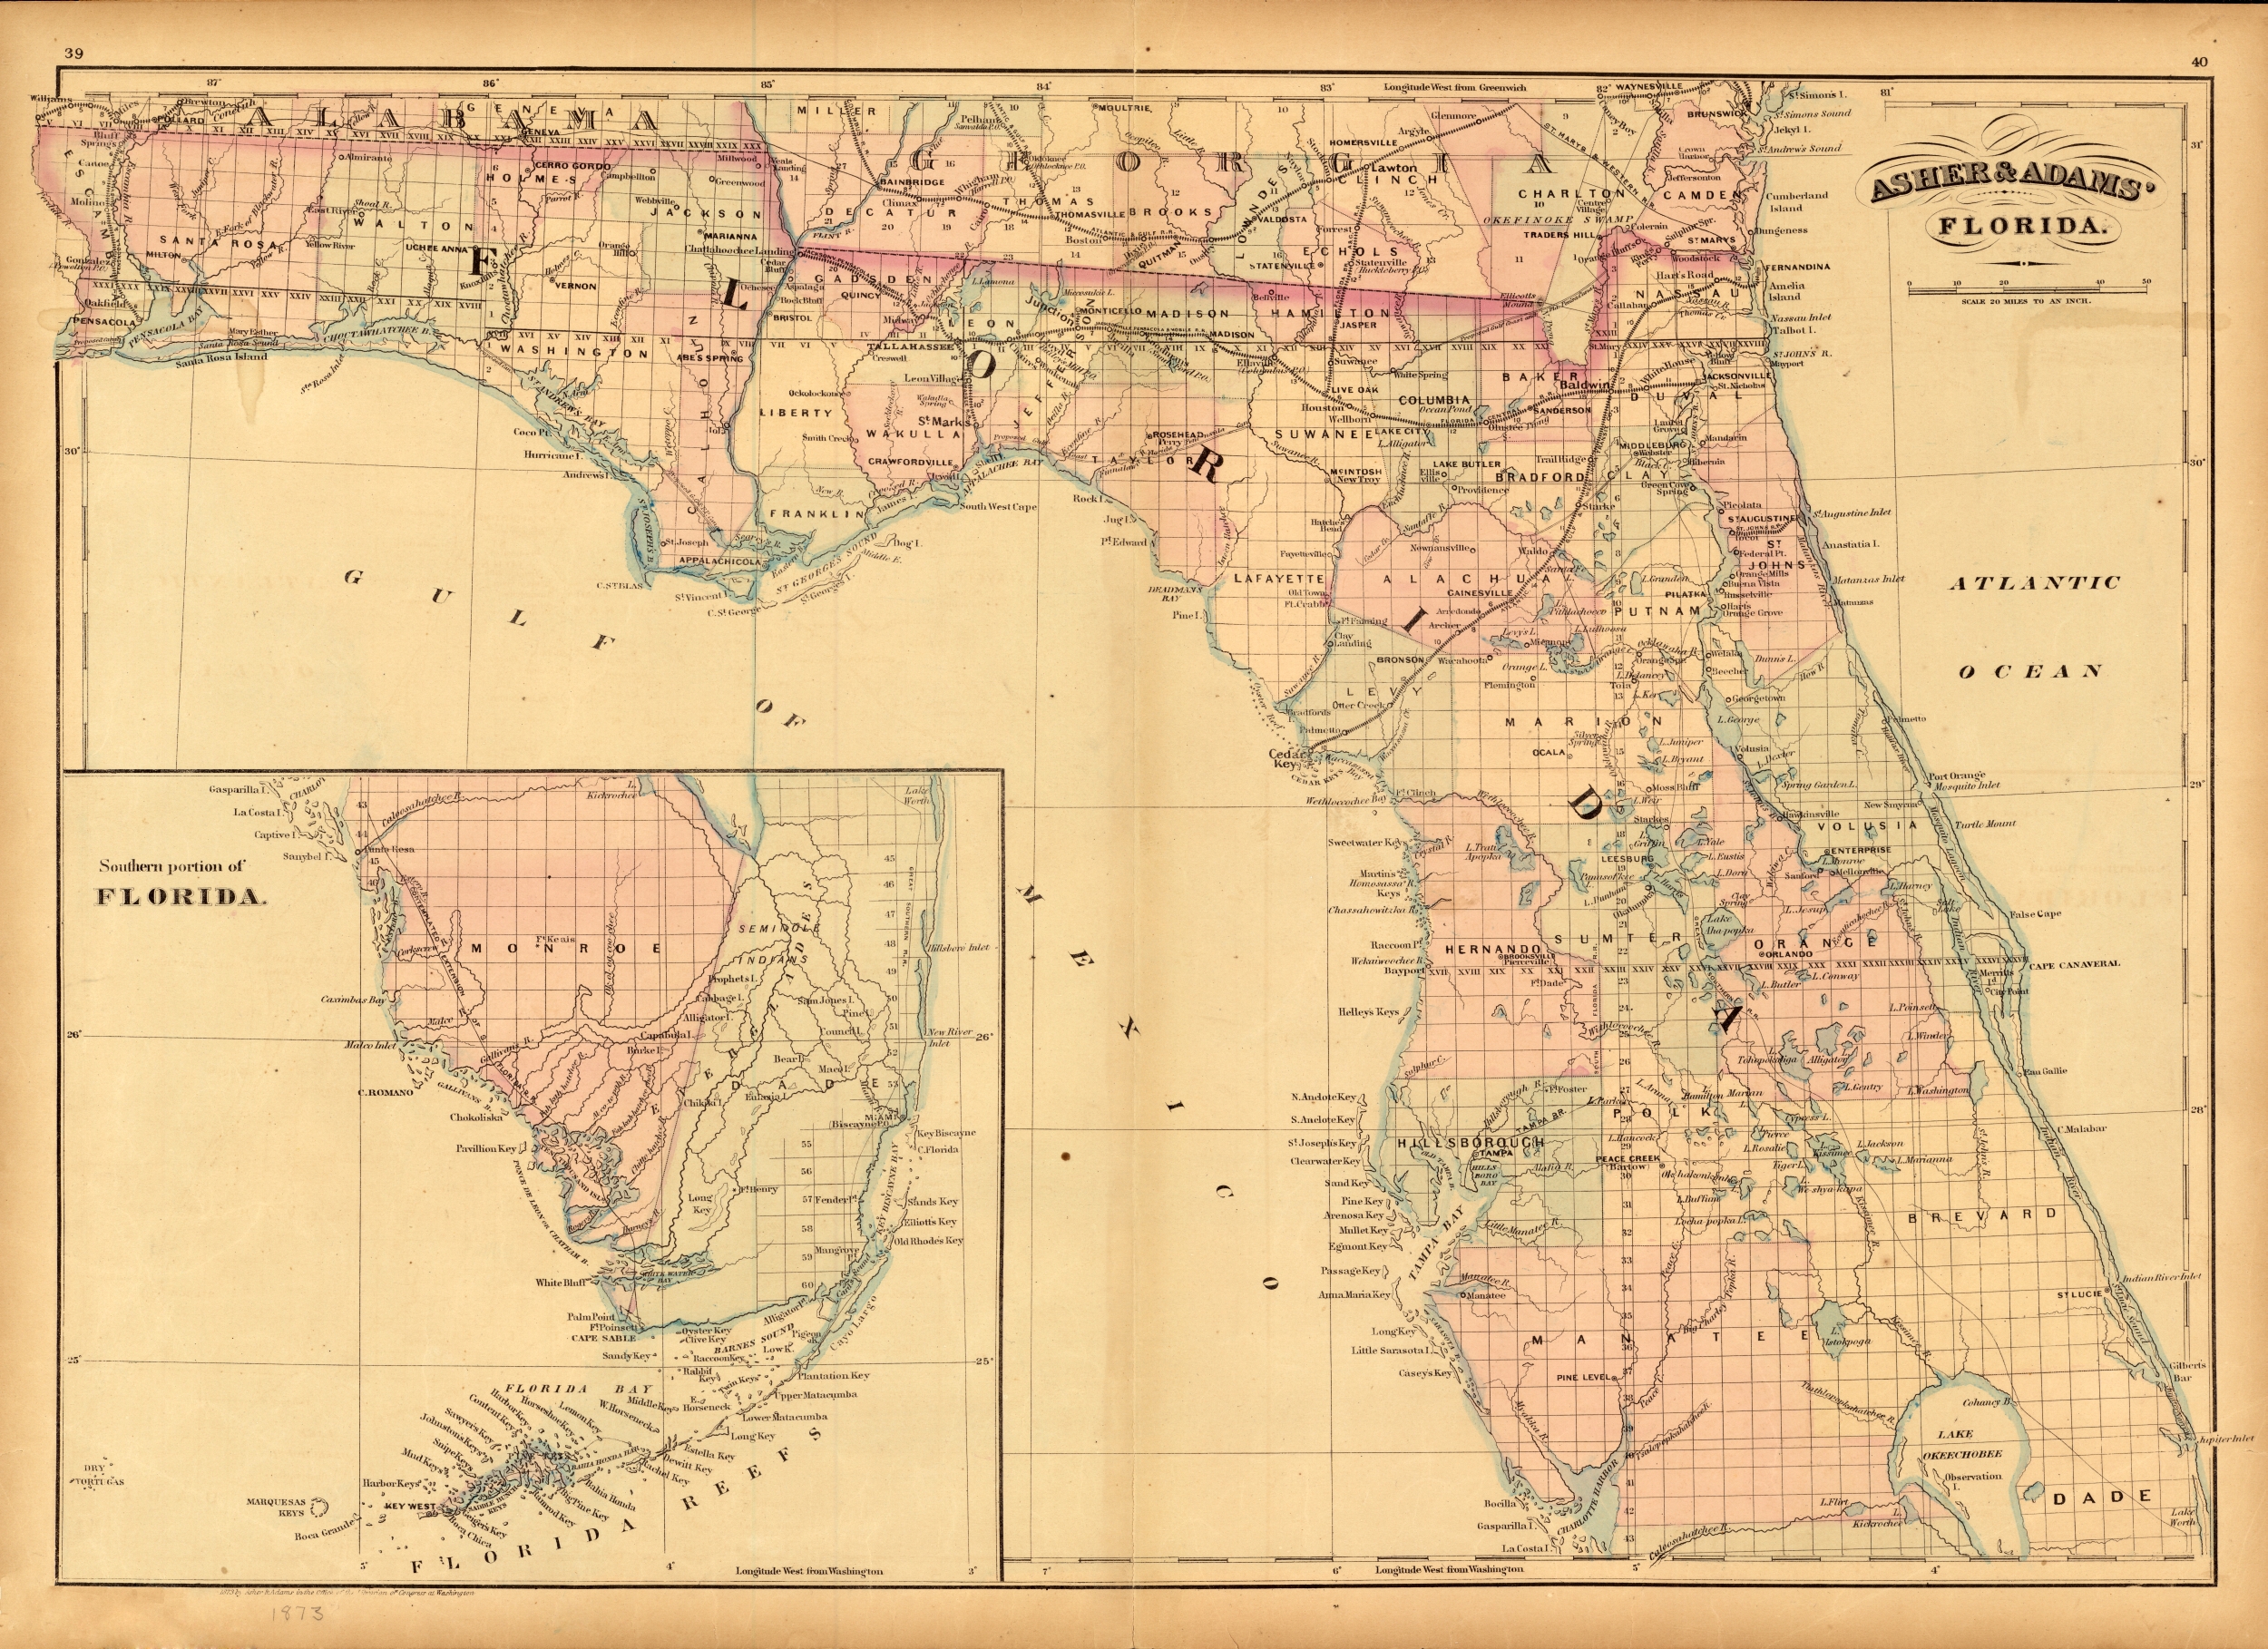 Asher and Adams' Florida, 1873